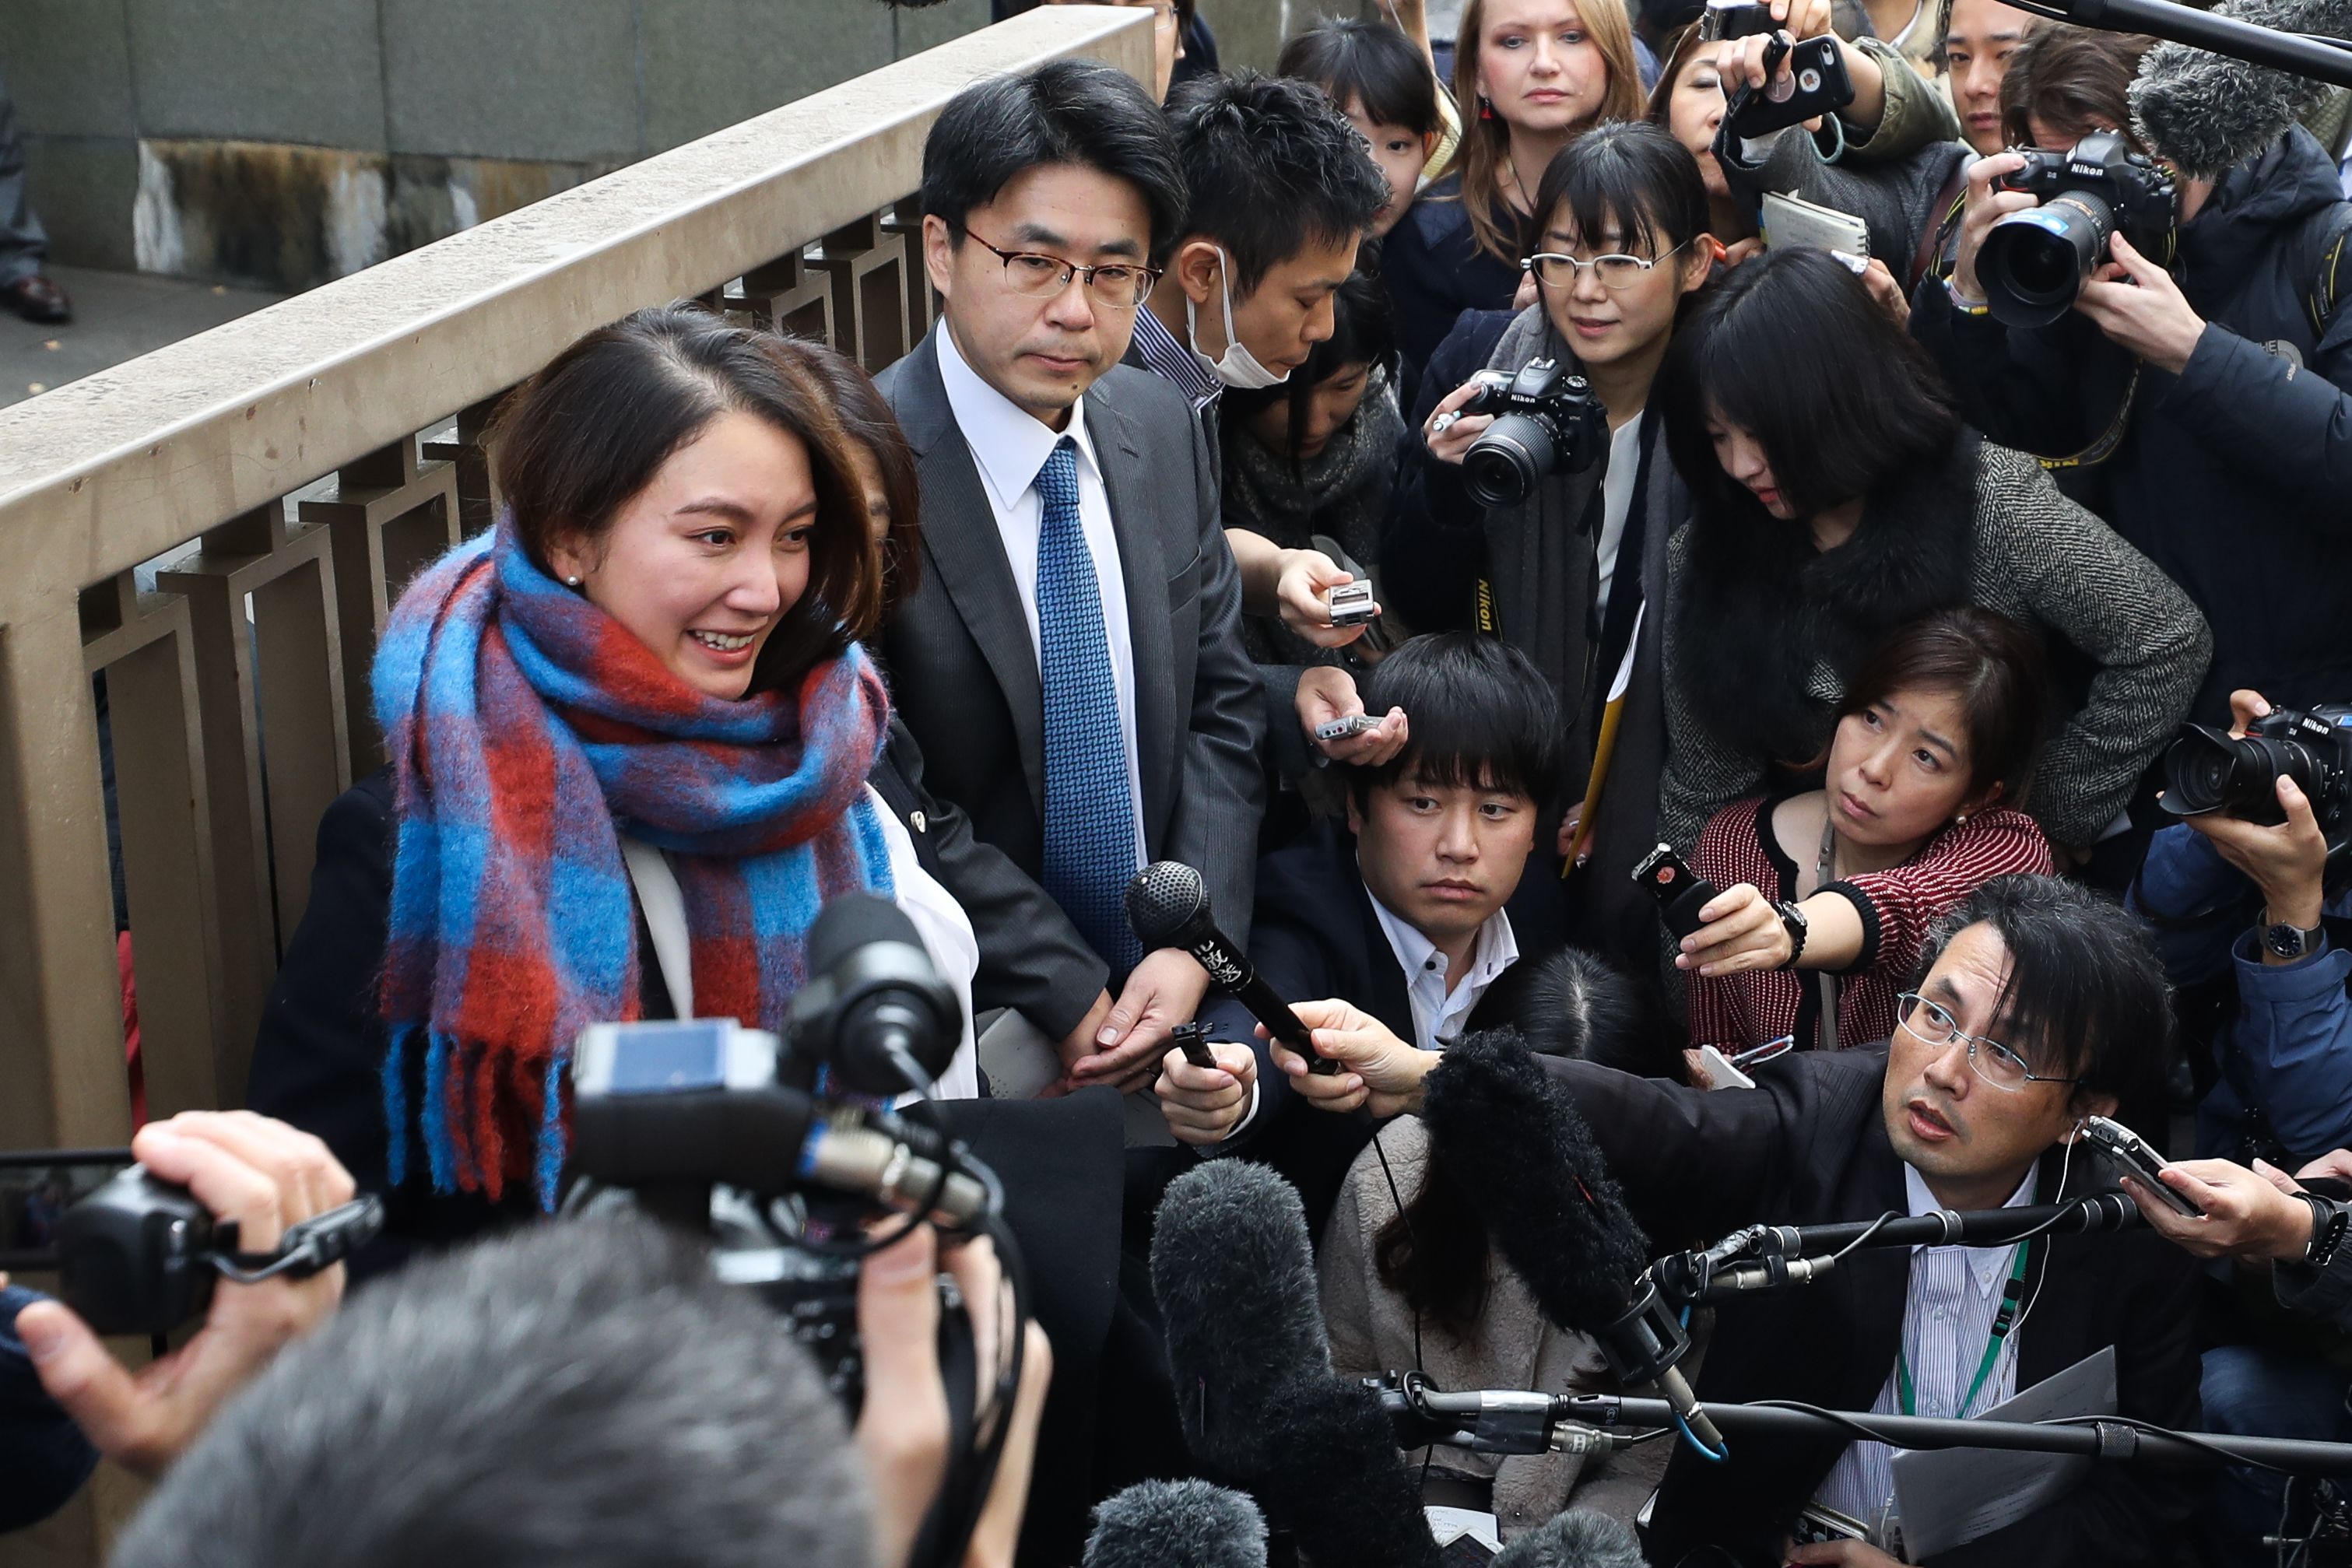 Momrapefuking - Shiori Ito won civil case against her alleged rapist. But Japan's rape laws  need overhaul, campaigners say | CNN